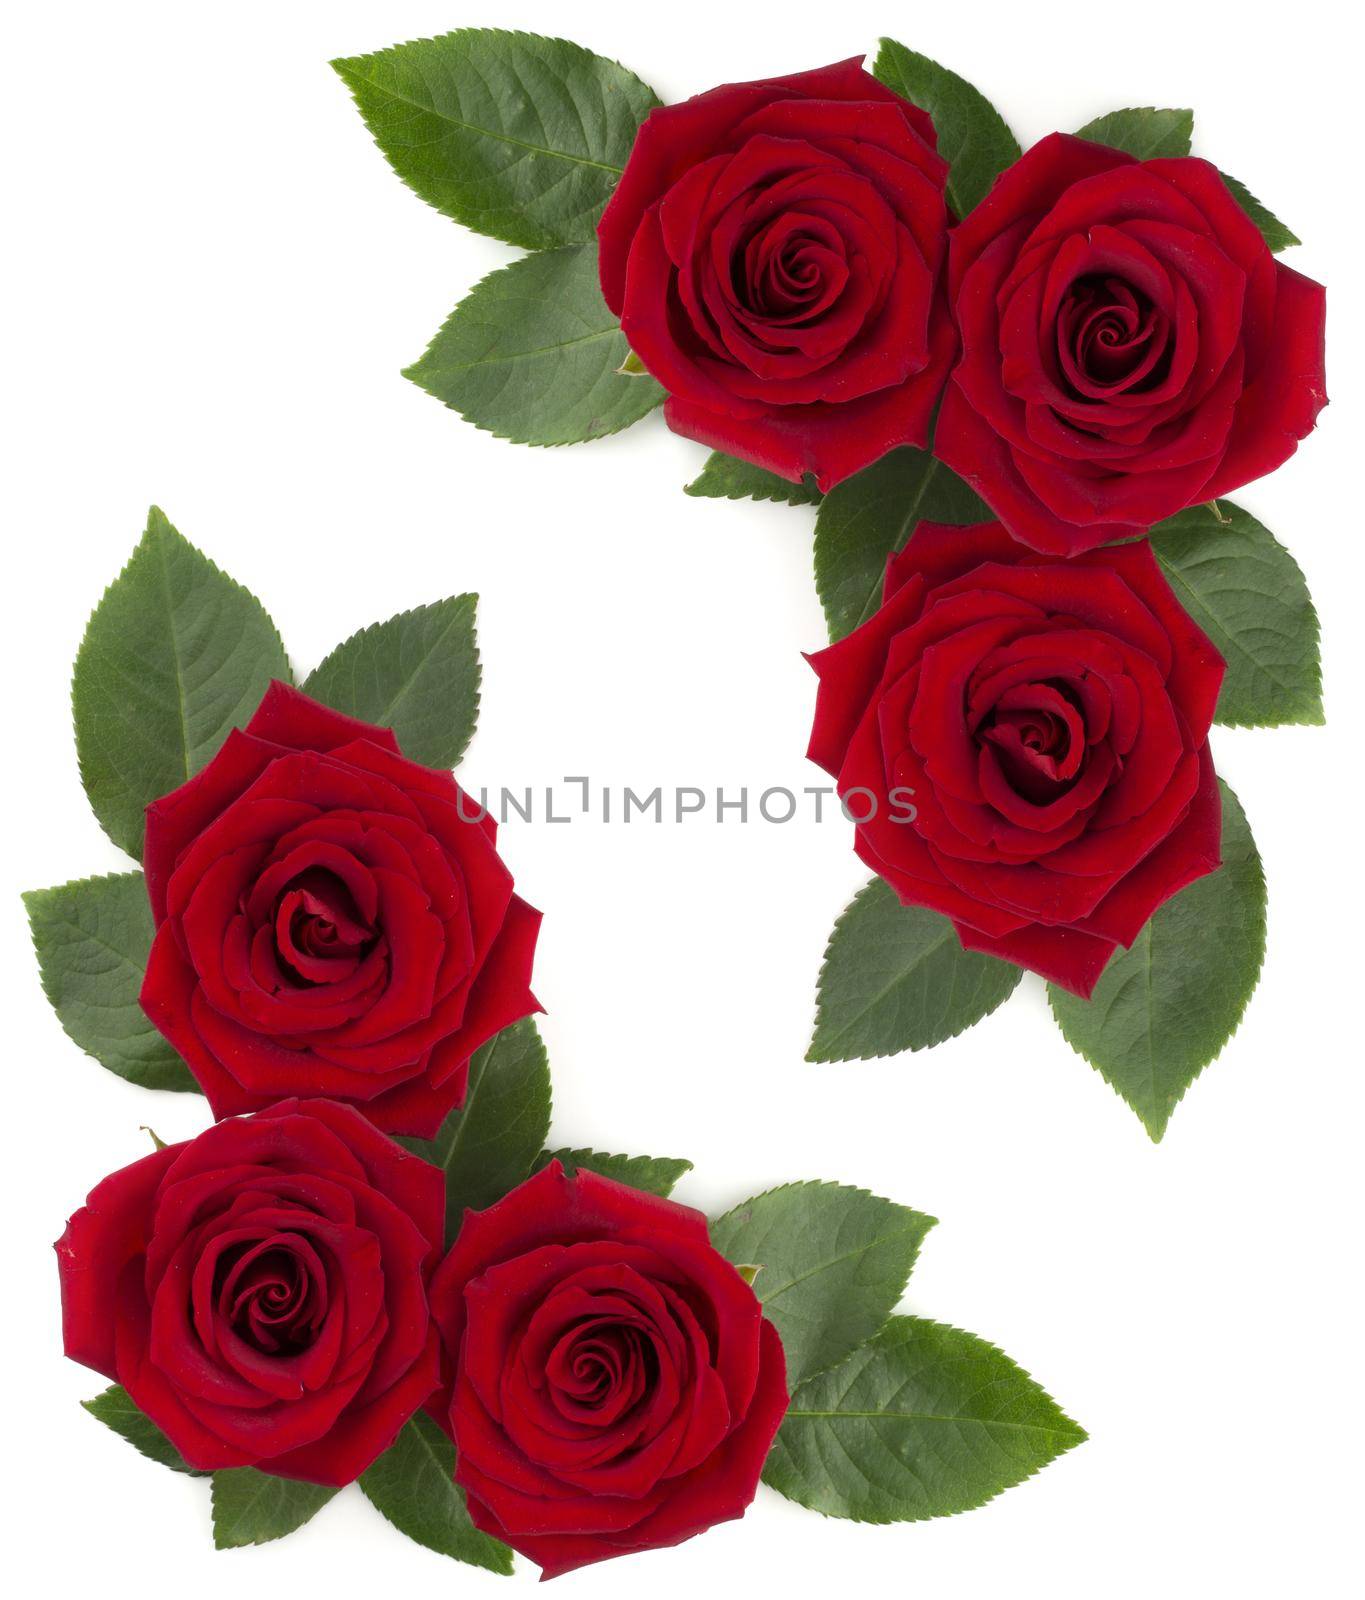 Red rose flowers corner design on white by destillat